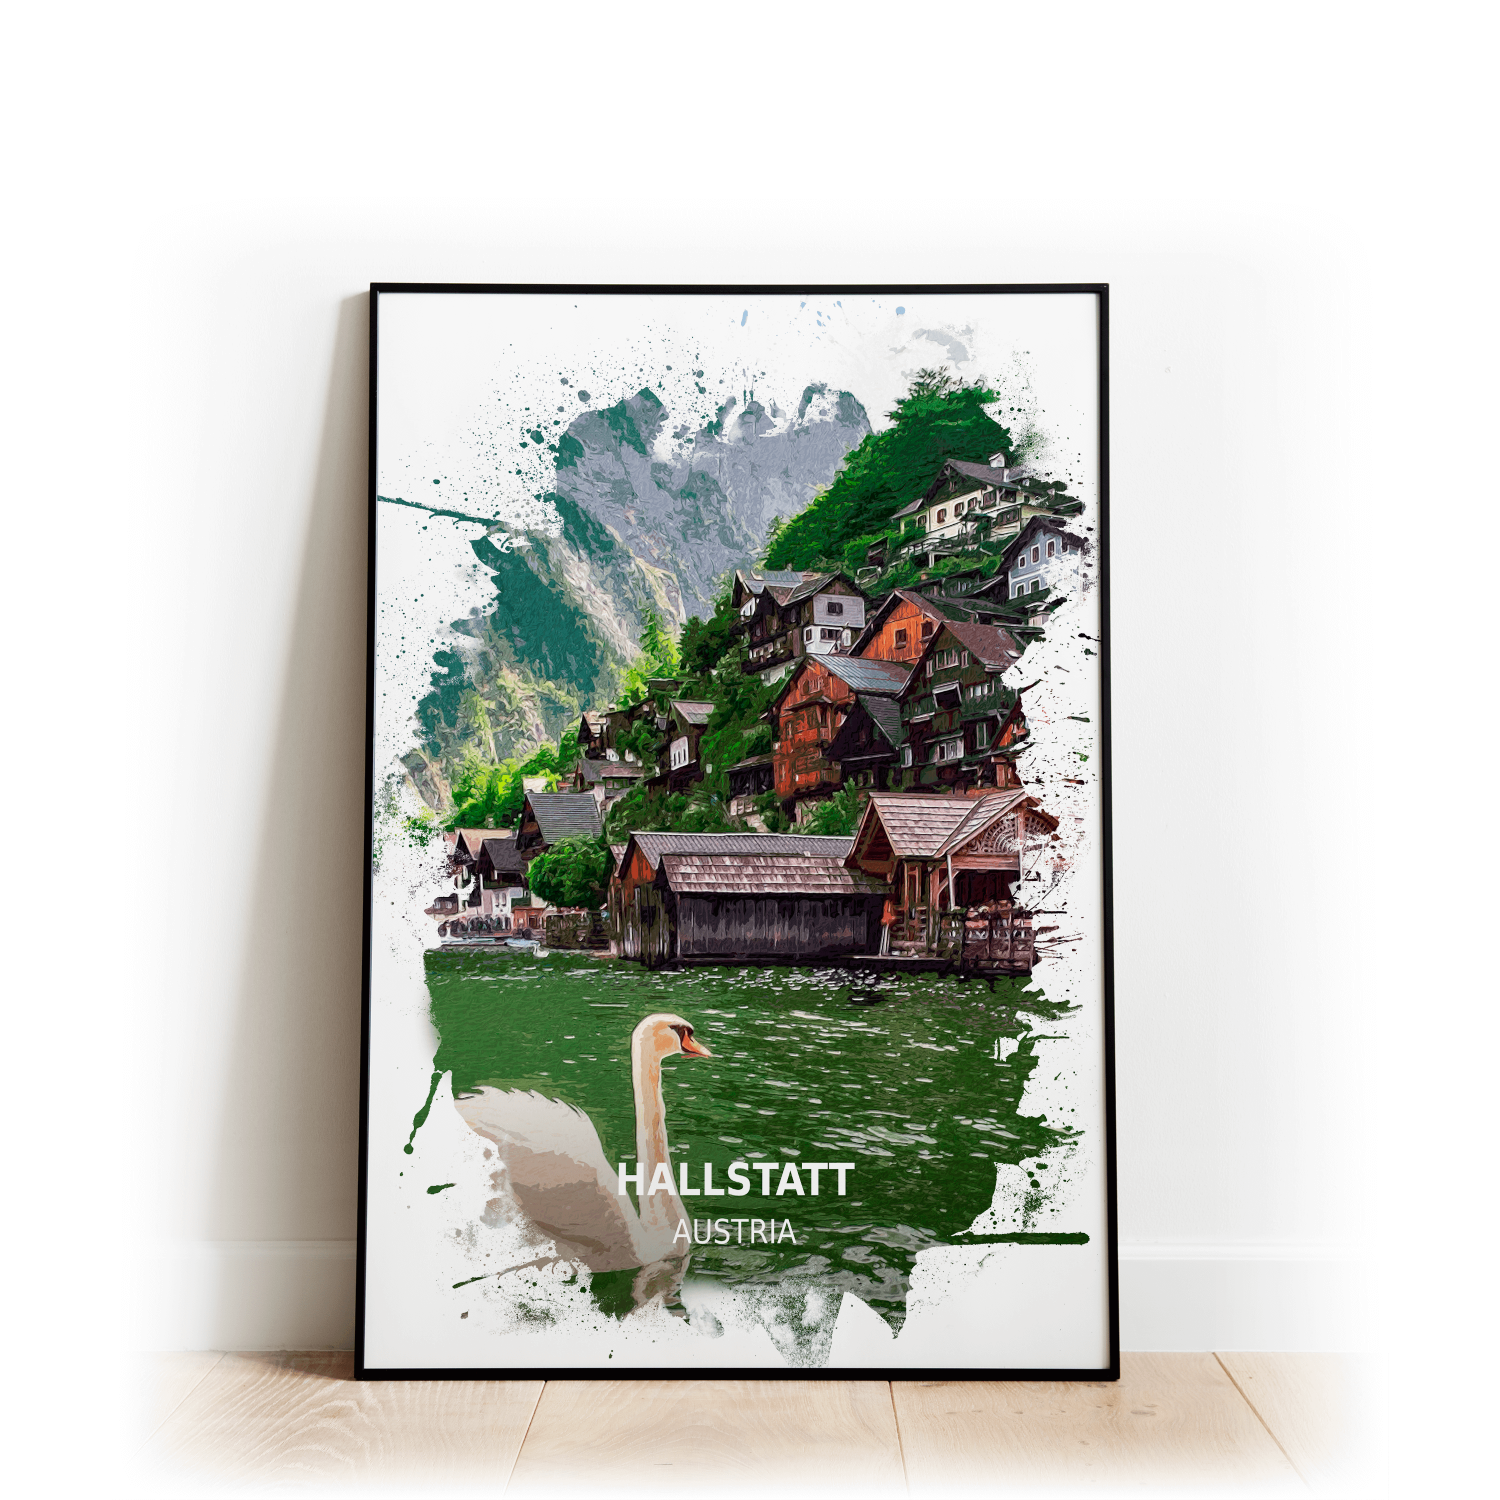 Hallstatt - Austria - Print - A4 - Standard - Print Only